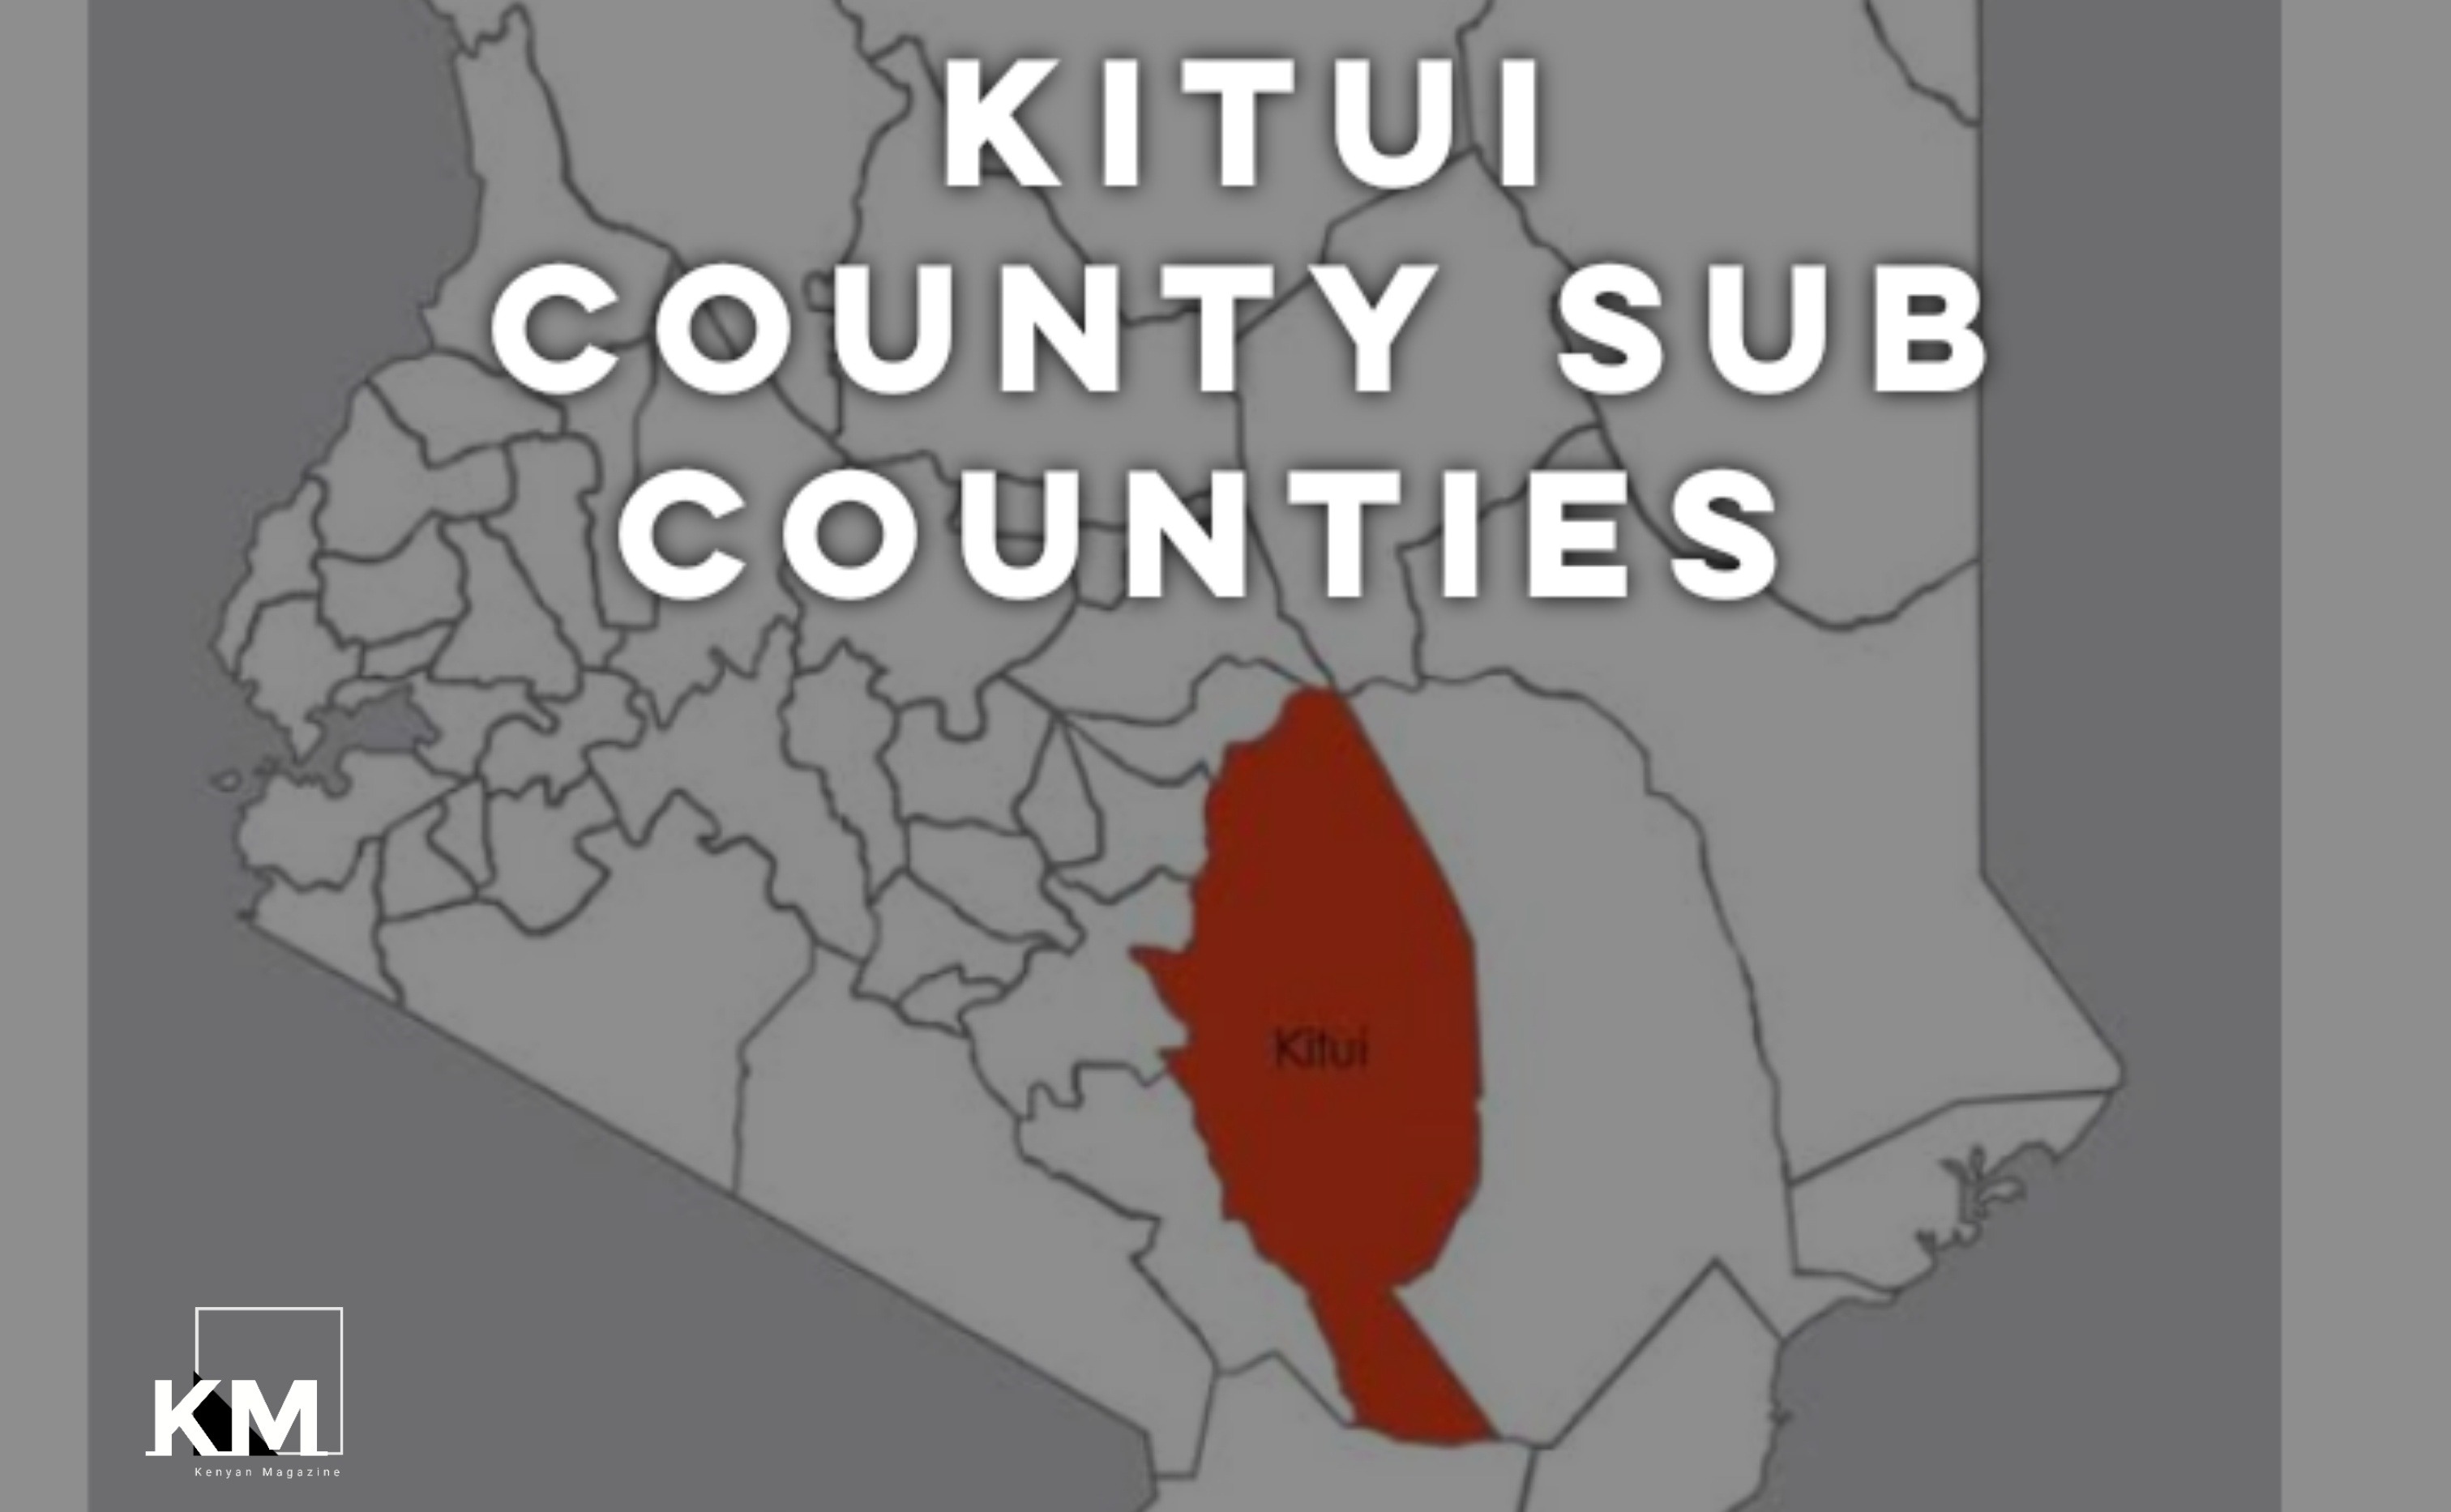 Kitui County Sub Counties